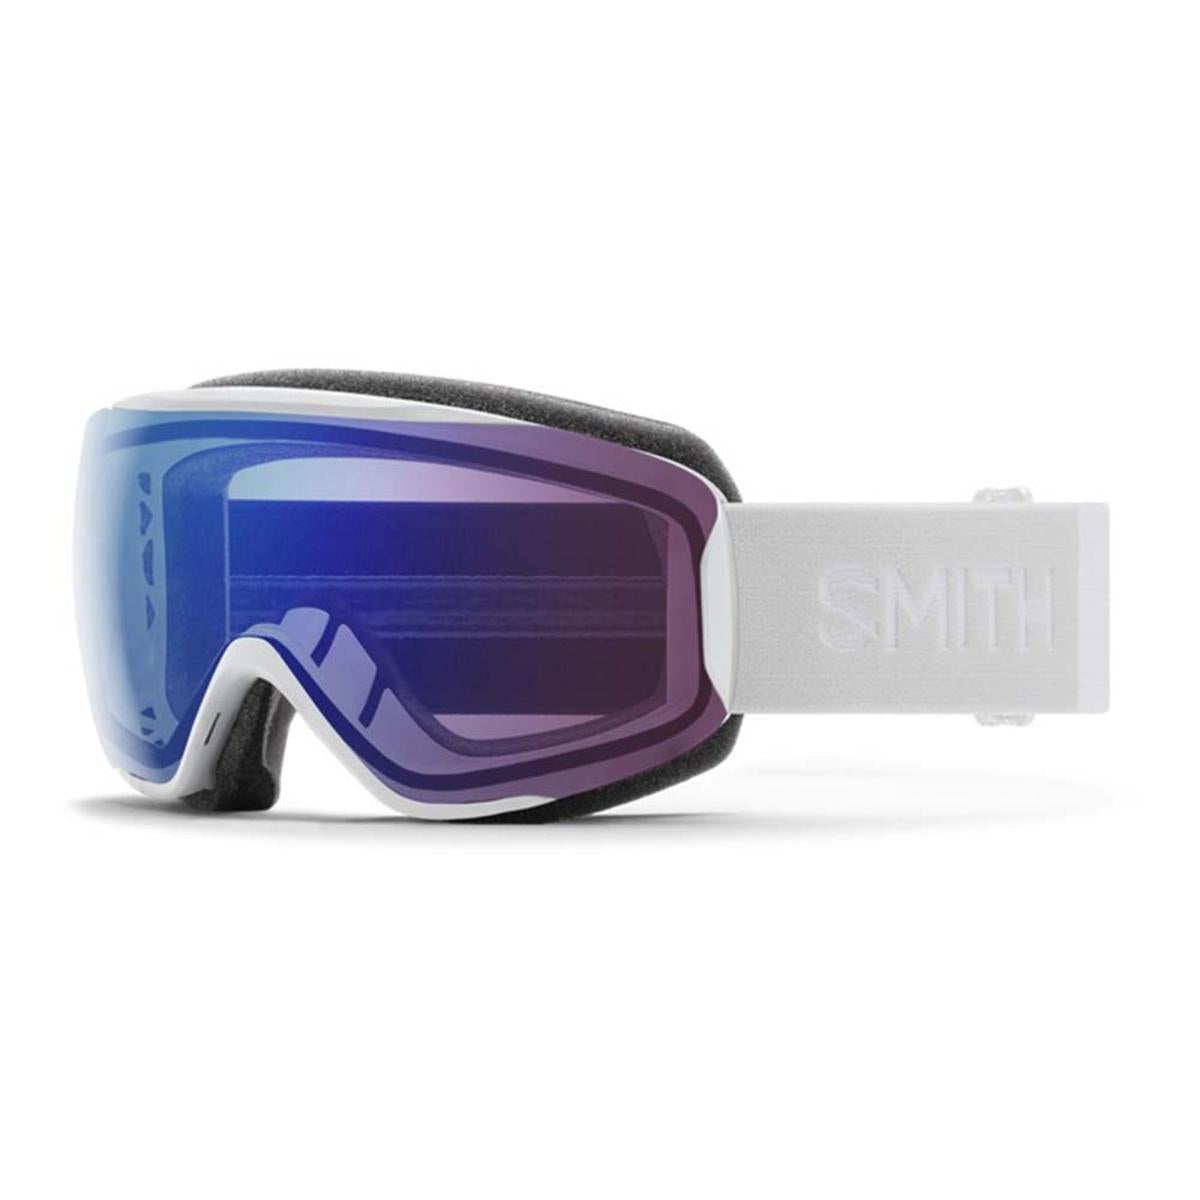 Smith Optics Women's Moment Goggles ChromaPop Photochromic Rose Flash Mirror - White Vapor Frame